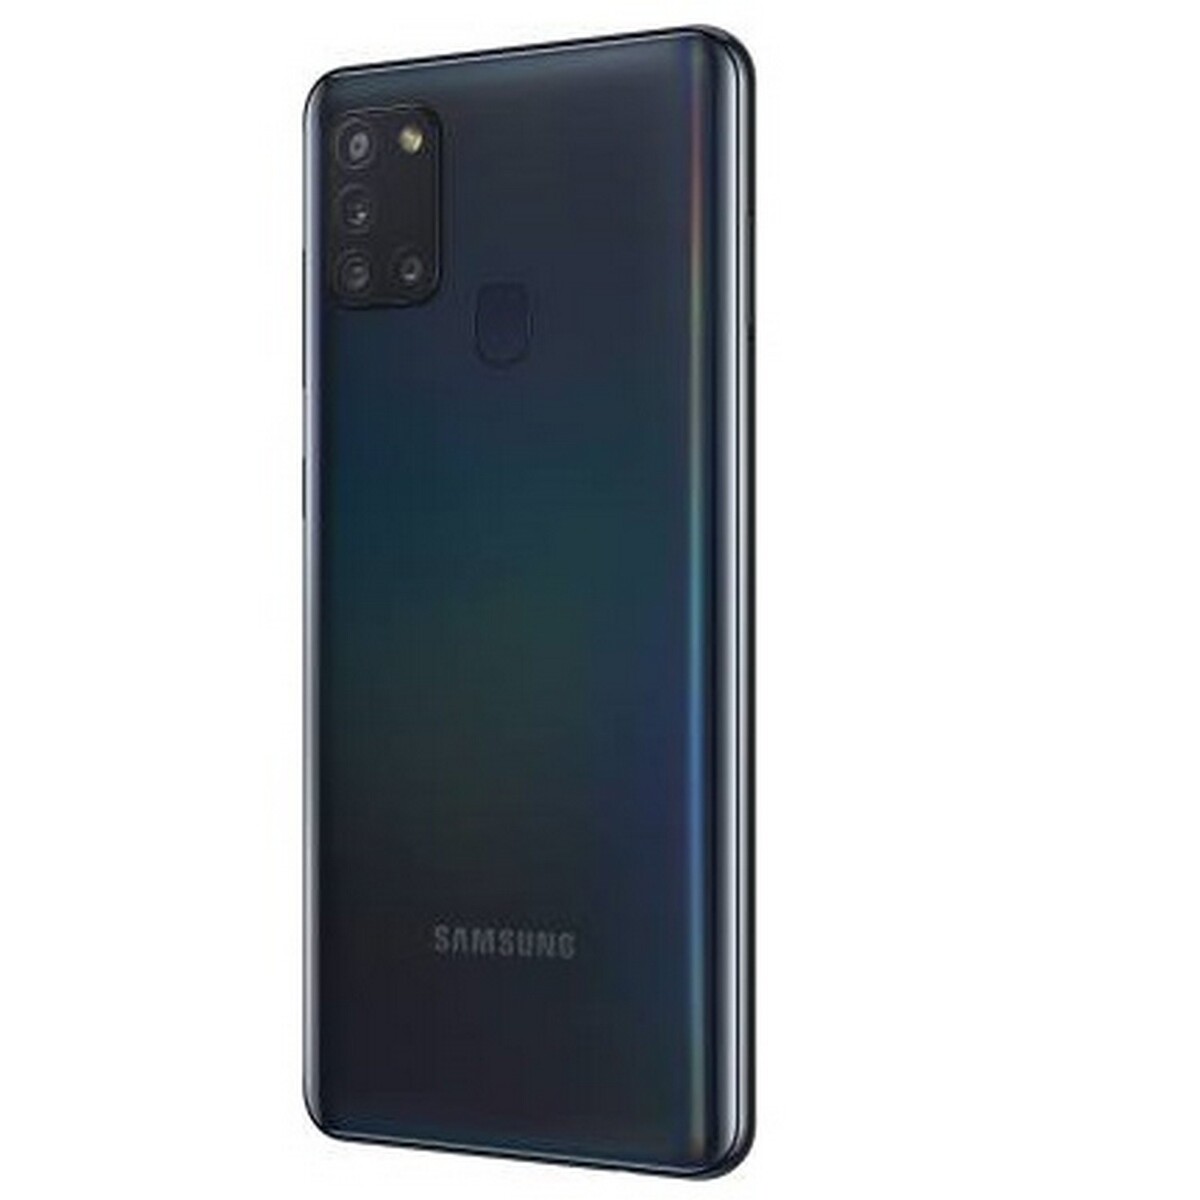 Samsung A21s 4GB /64GB  Black